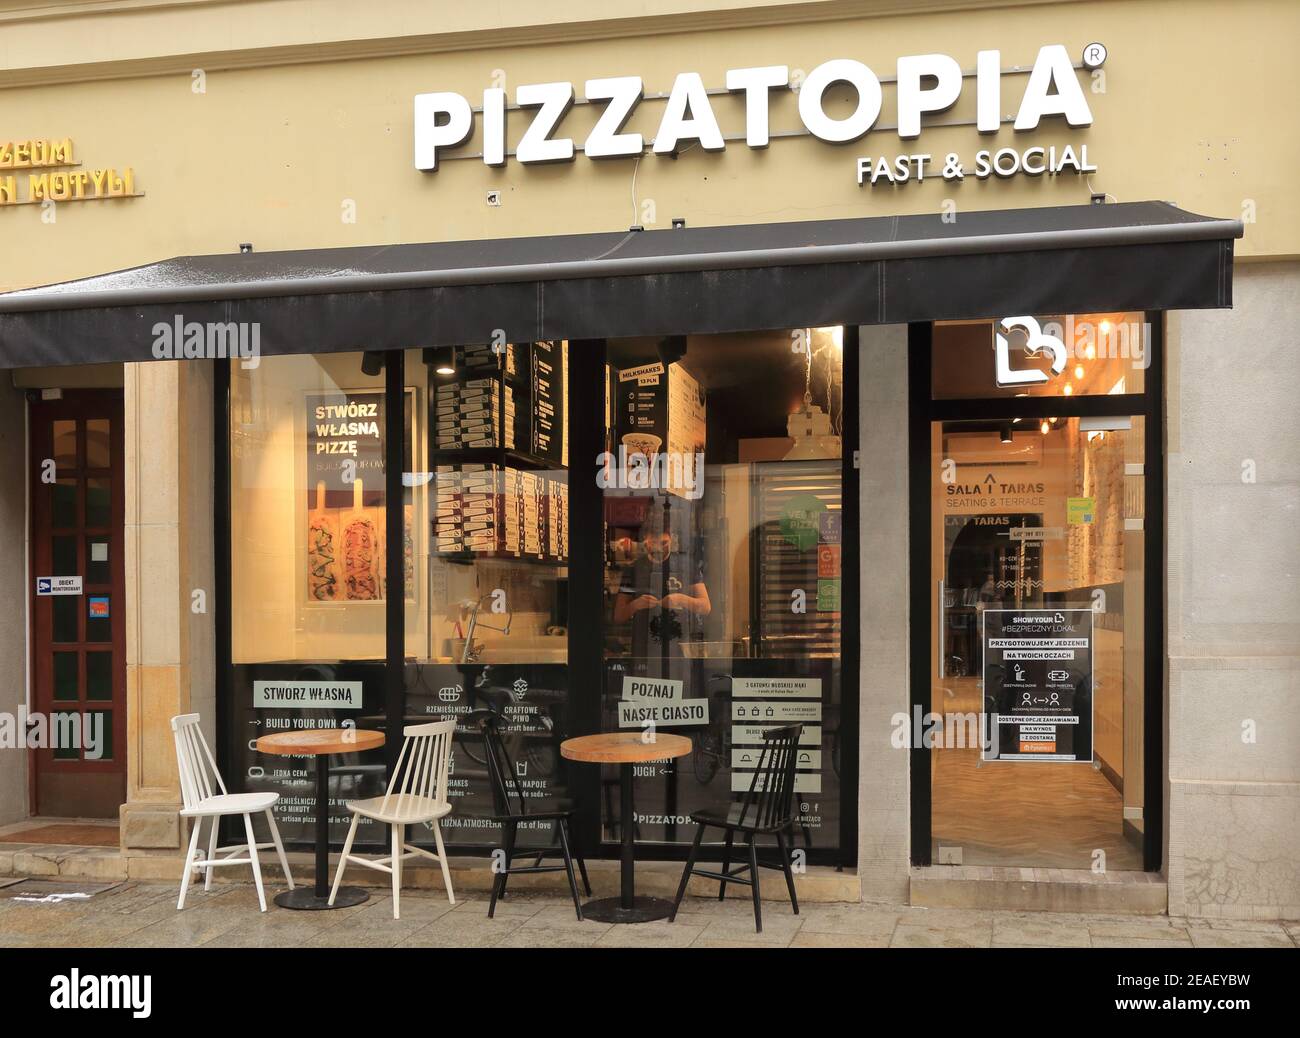 Cracow. Krakow, Poland. Pizzatopia logo on the facade of the restaurant and takeaway. Stock Photo